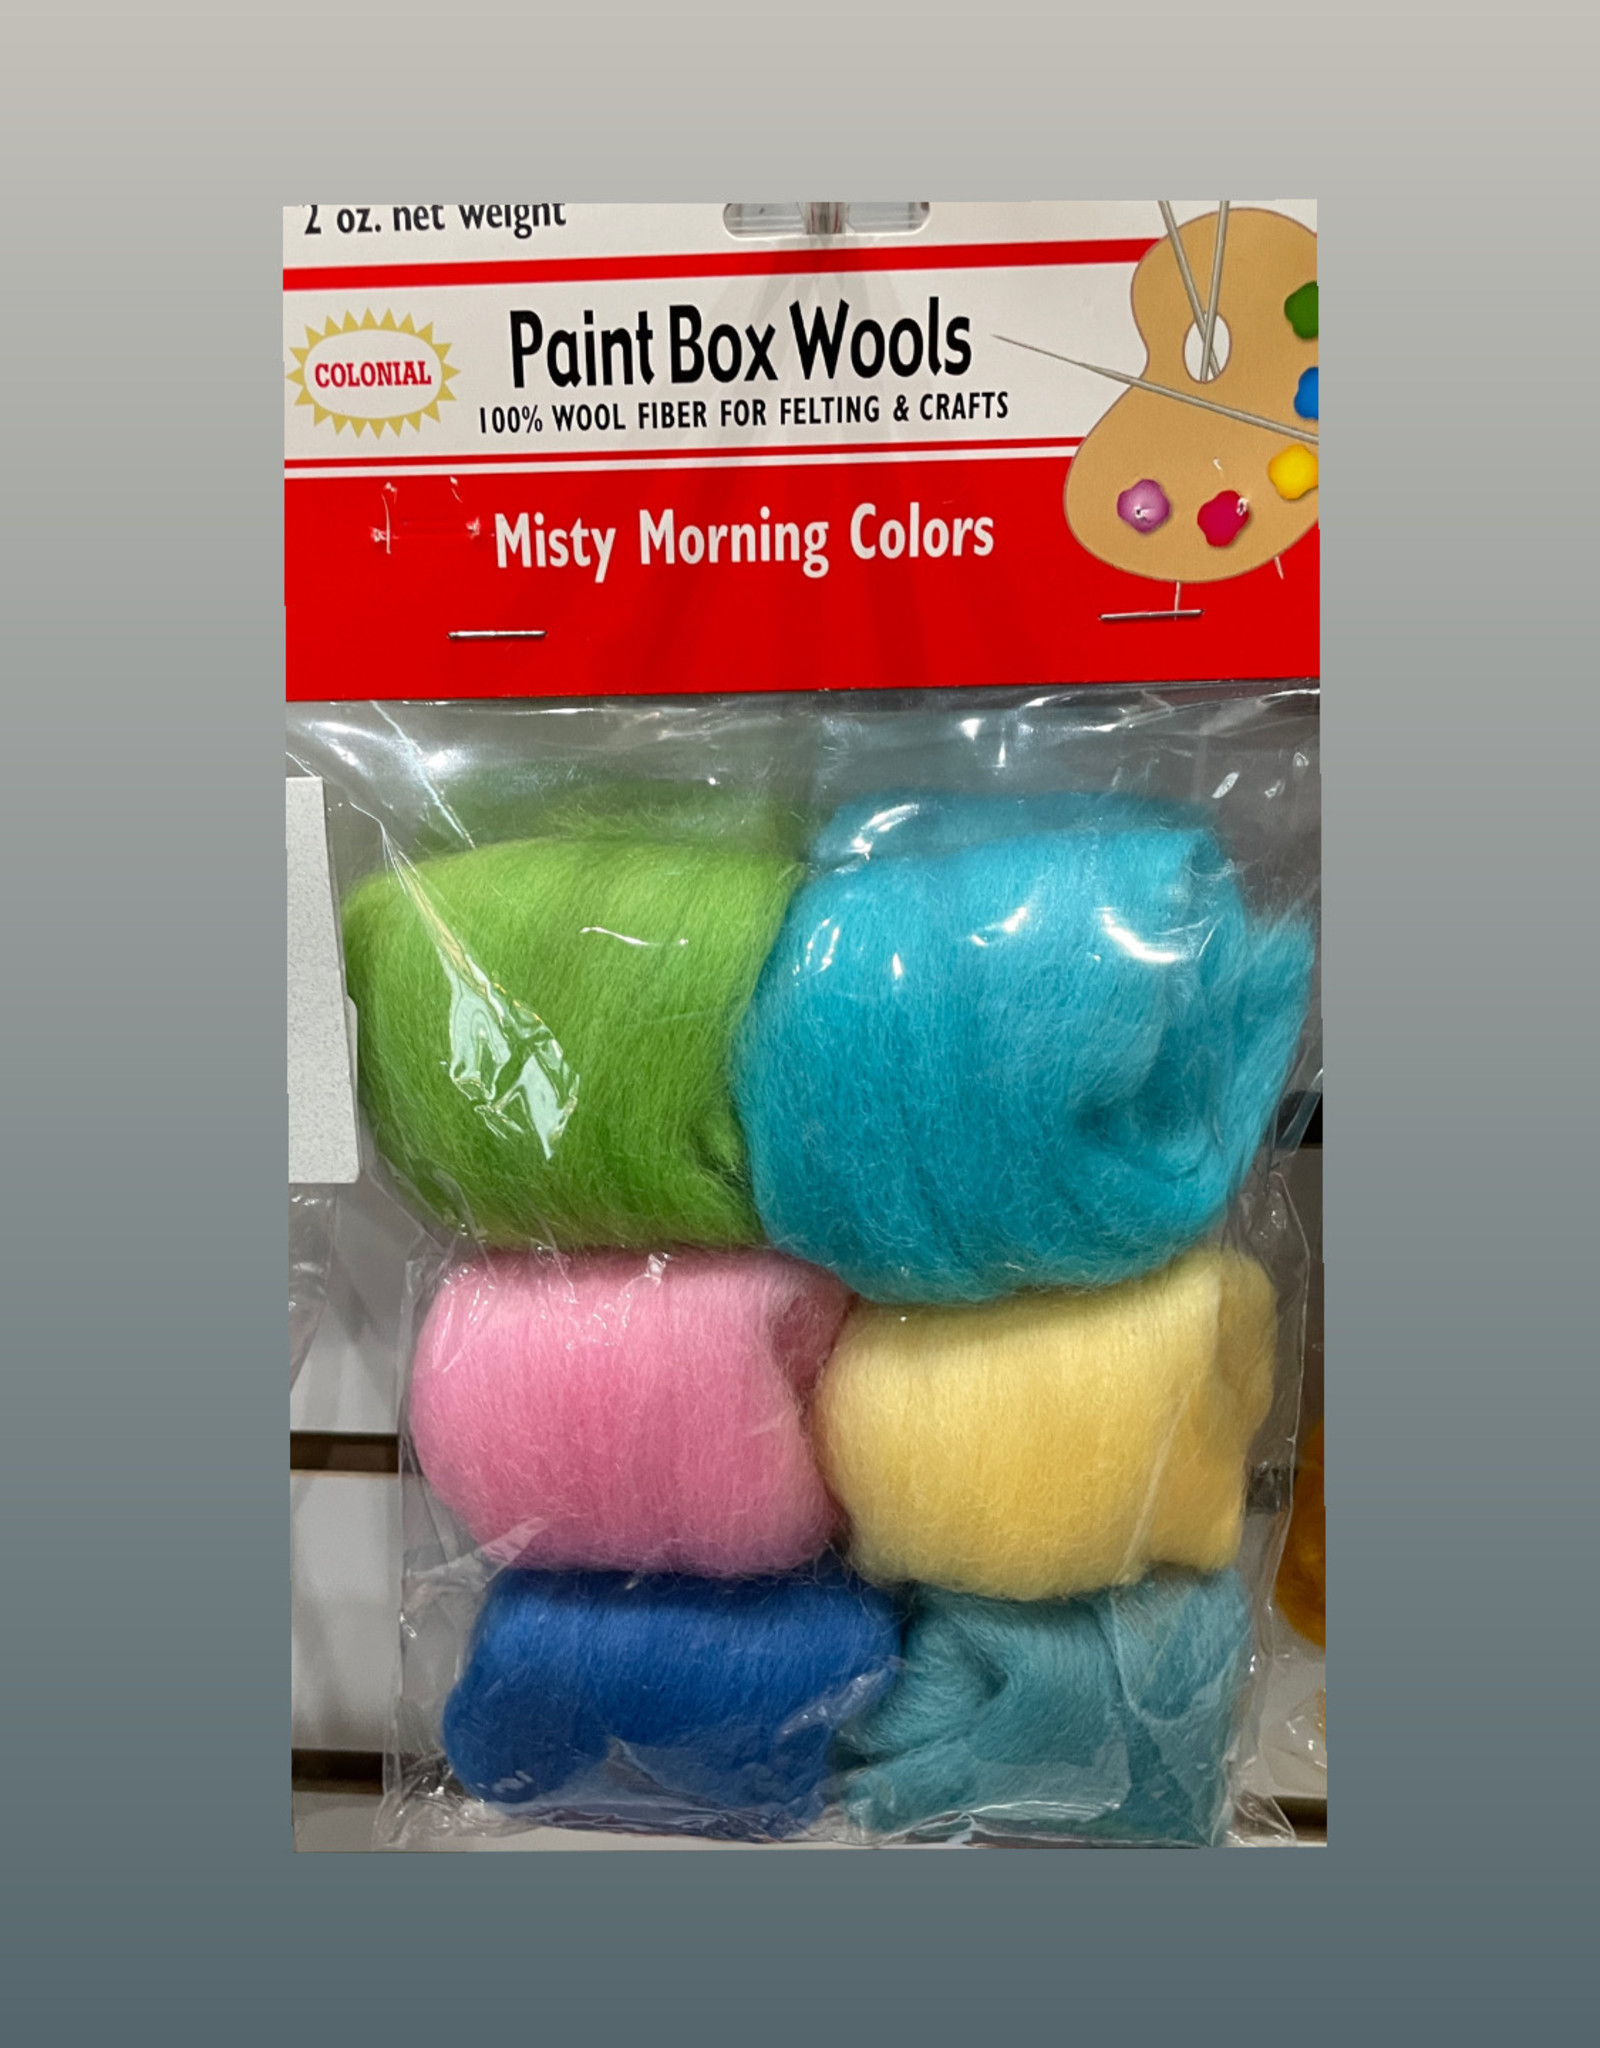 Paint Box Wools PBW Roving